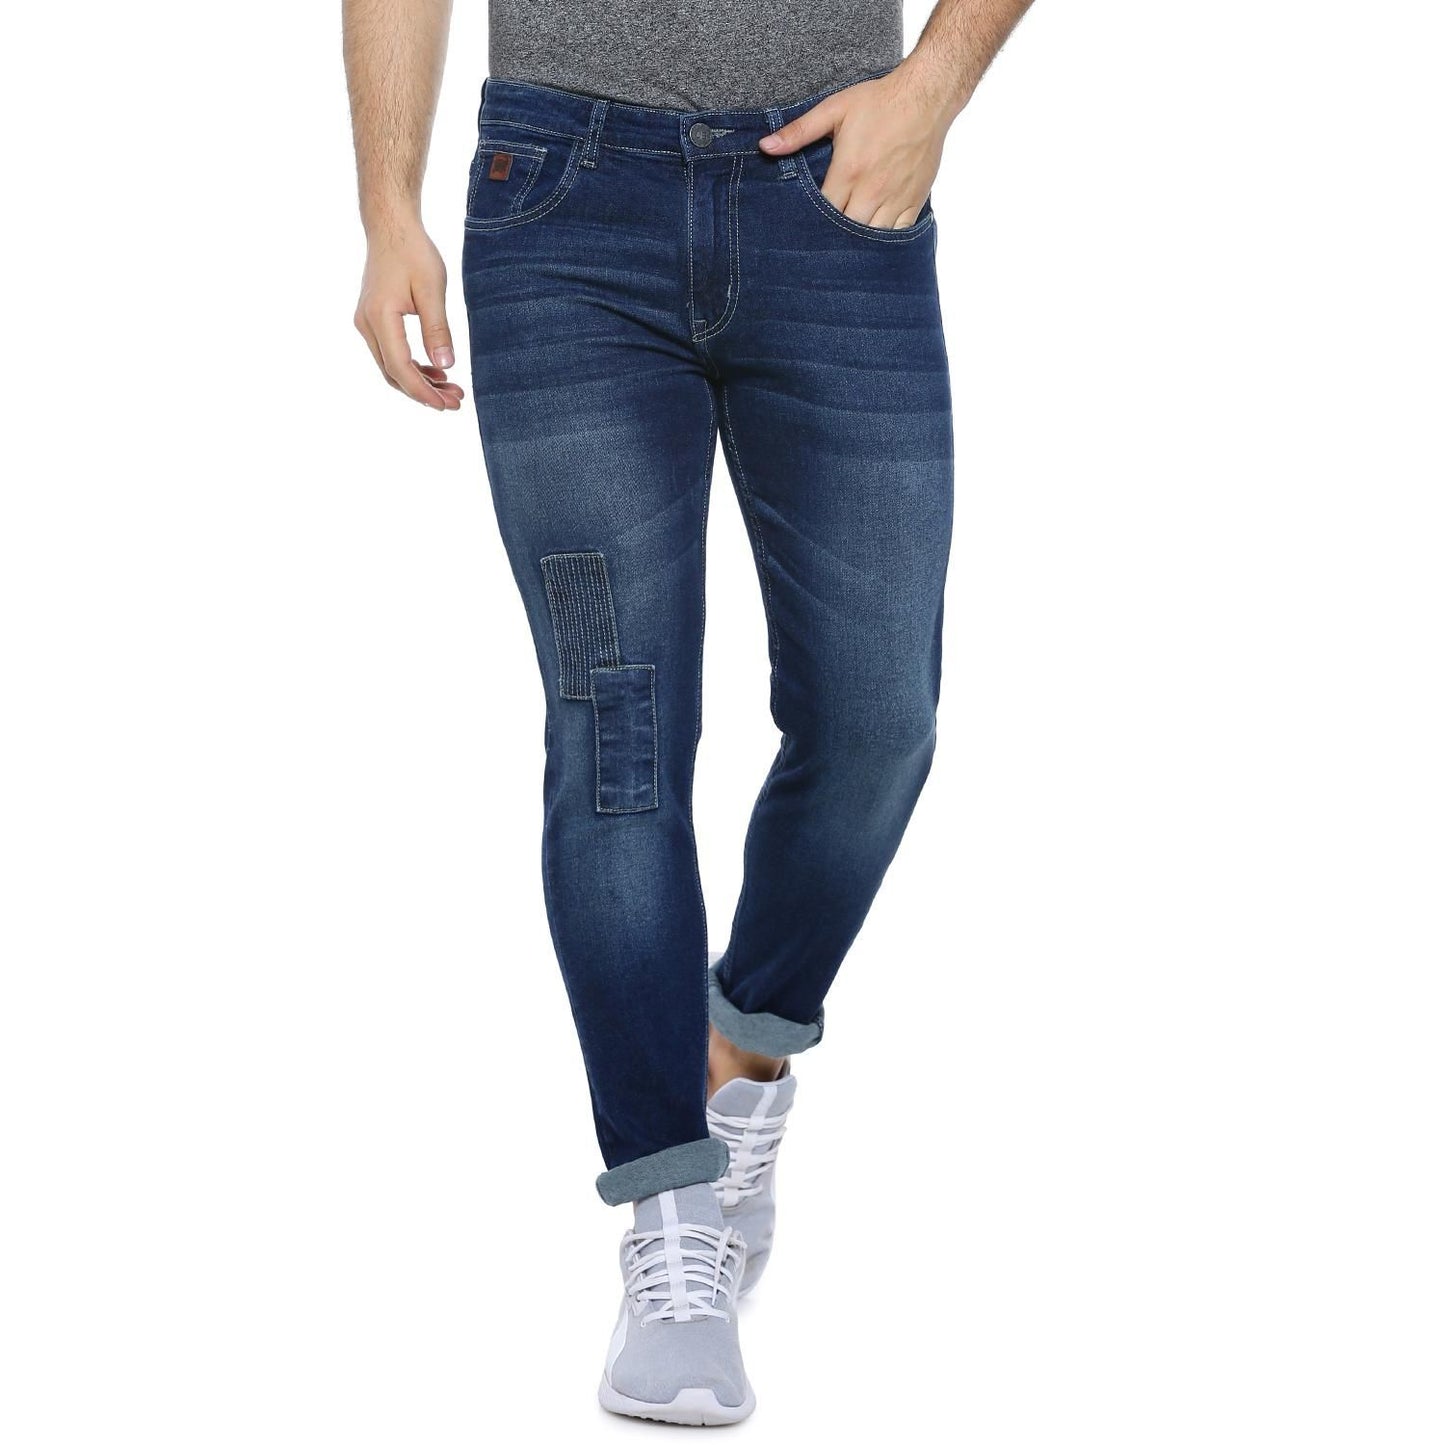 Campus Sutra Denim Rugged Slim Fit Jeans